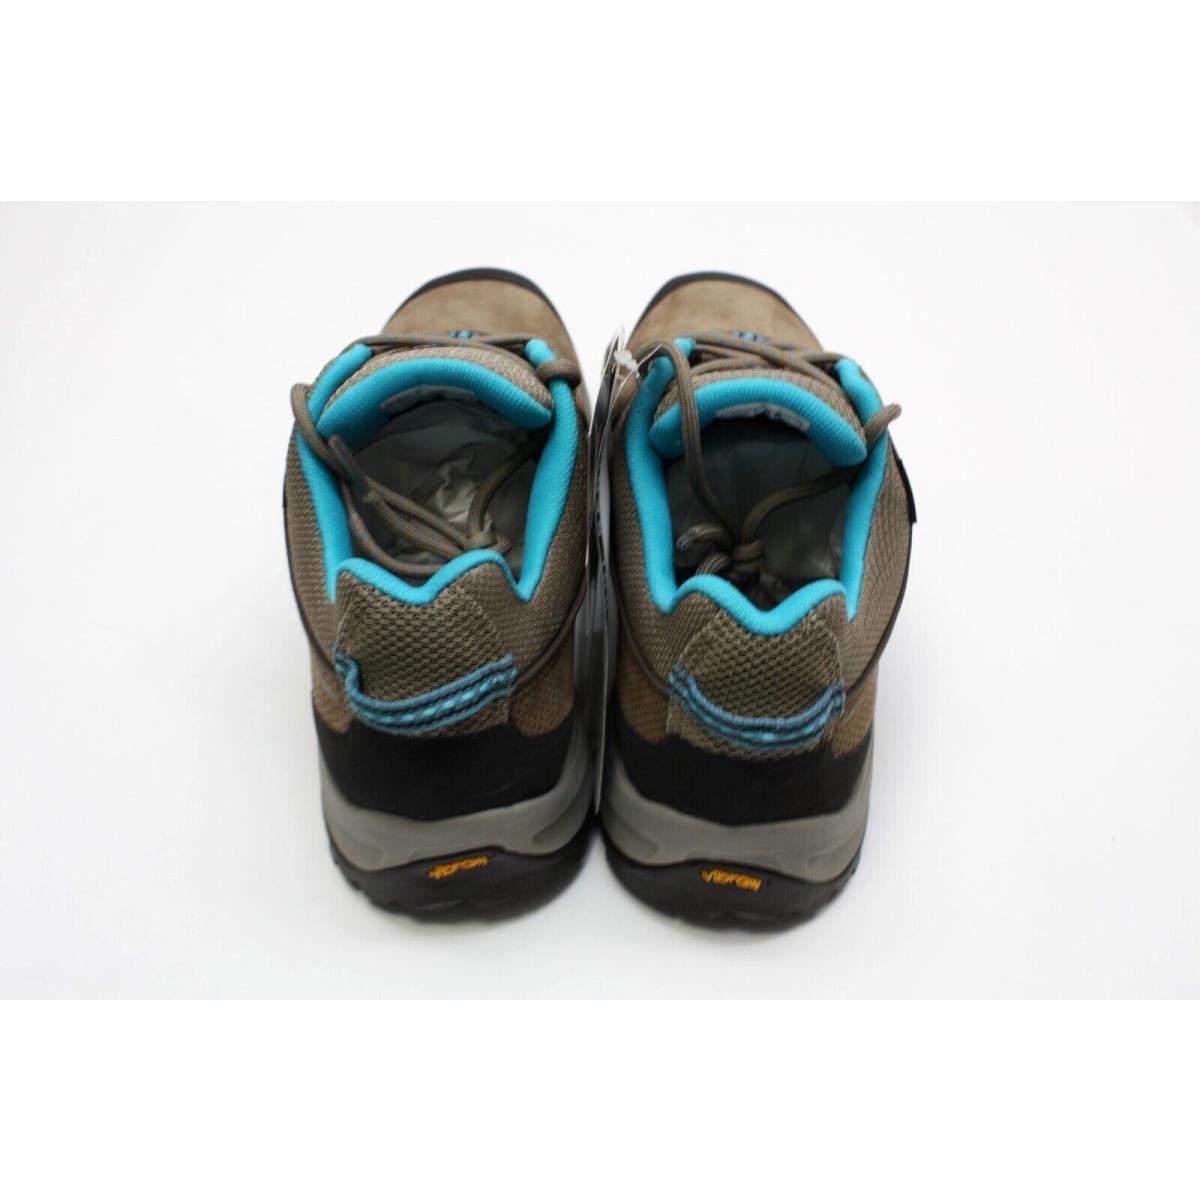 Lasportiva shoes  - Brown/Sea Blue 2